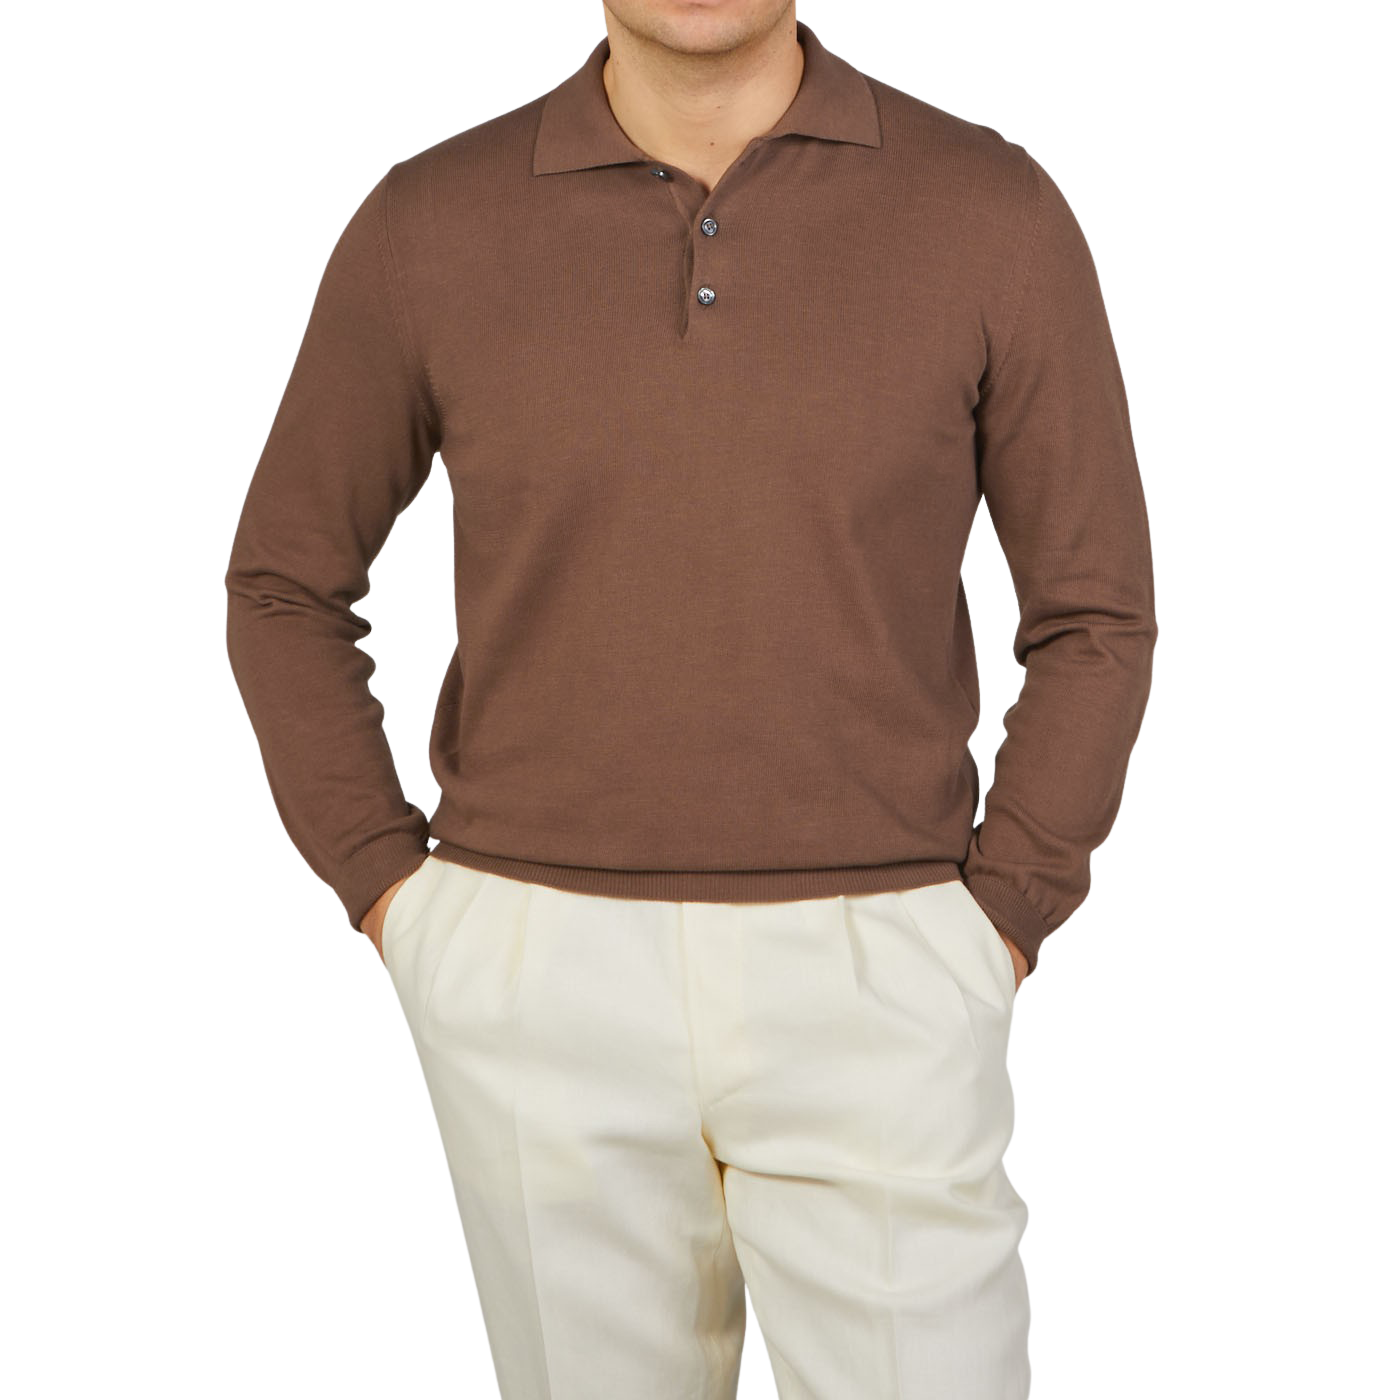 Mauro Ottaviani Light Brown Supima Cotton LS Polo Shirt Front1